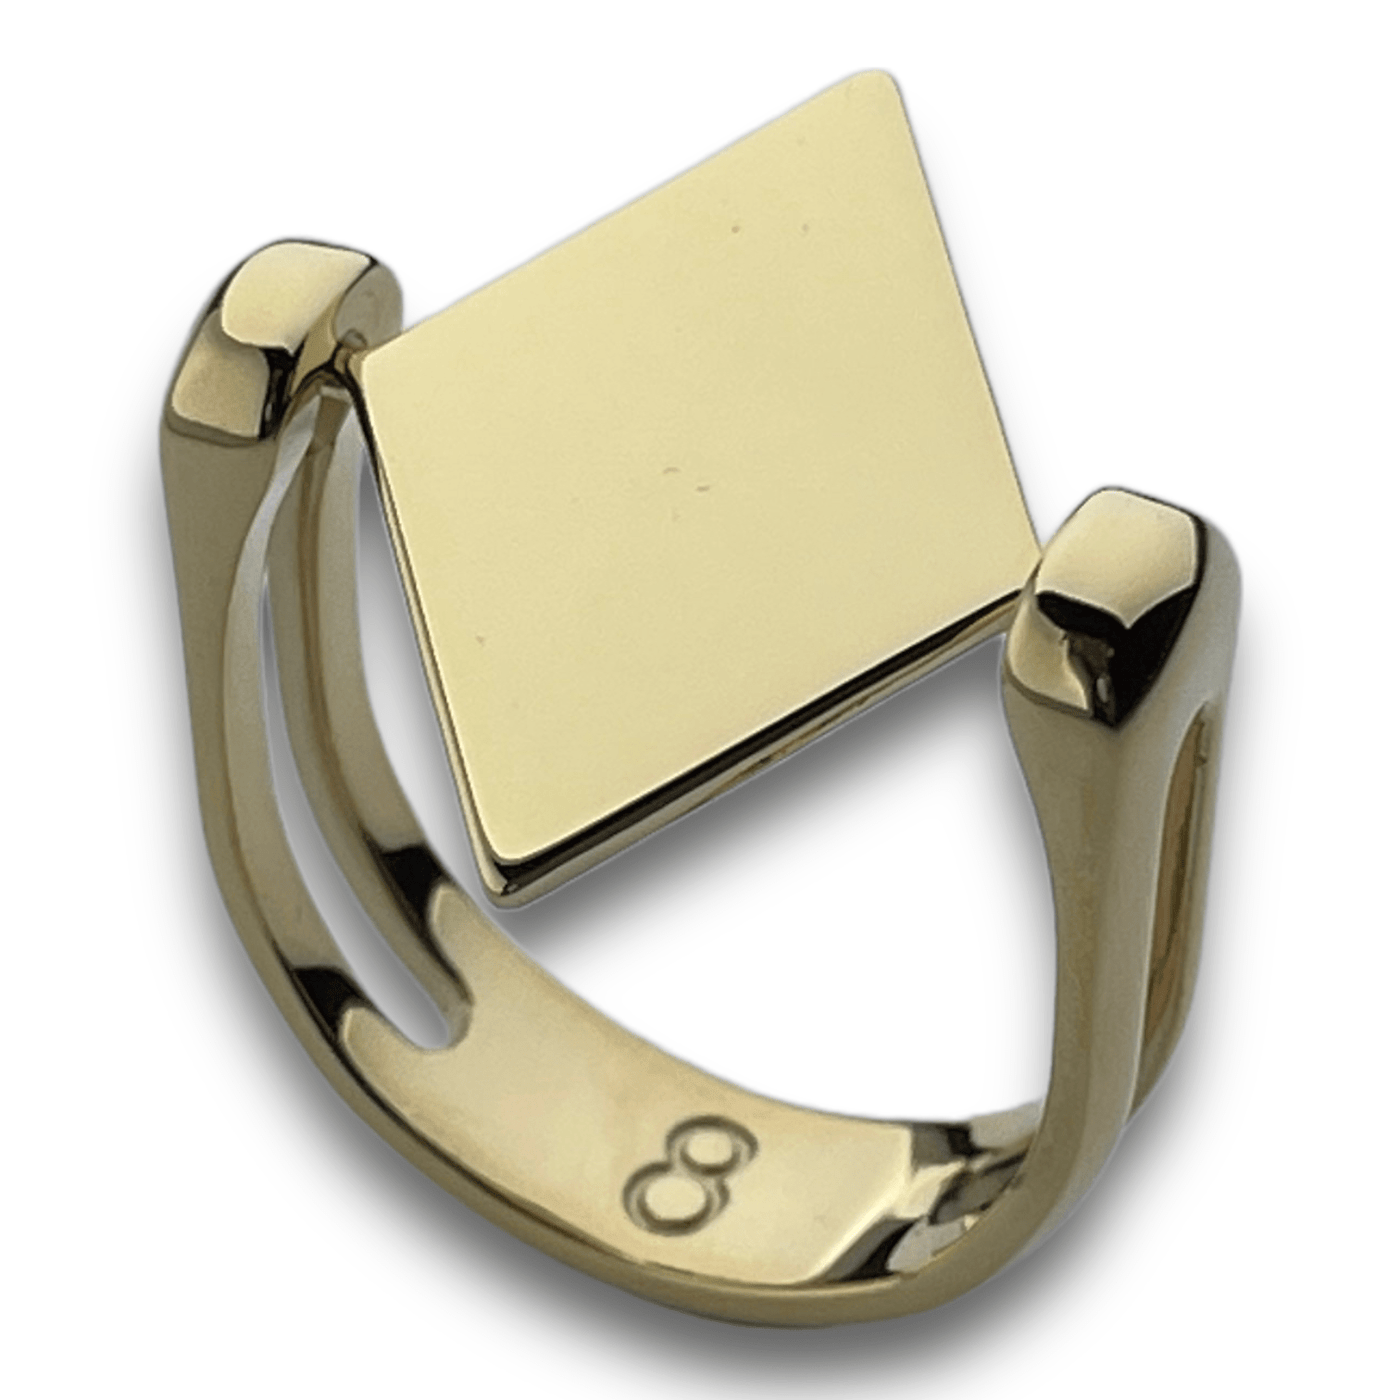 Diamond-Shaped Fidget Ring